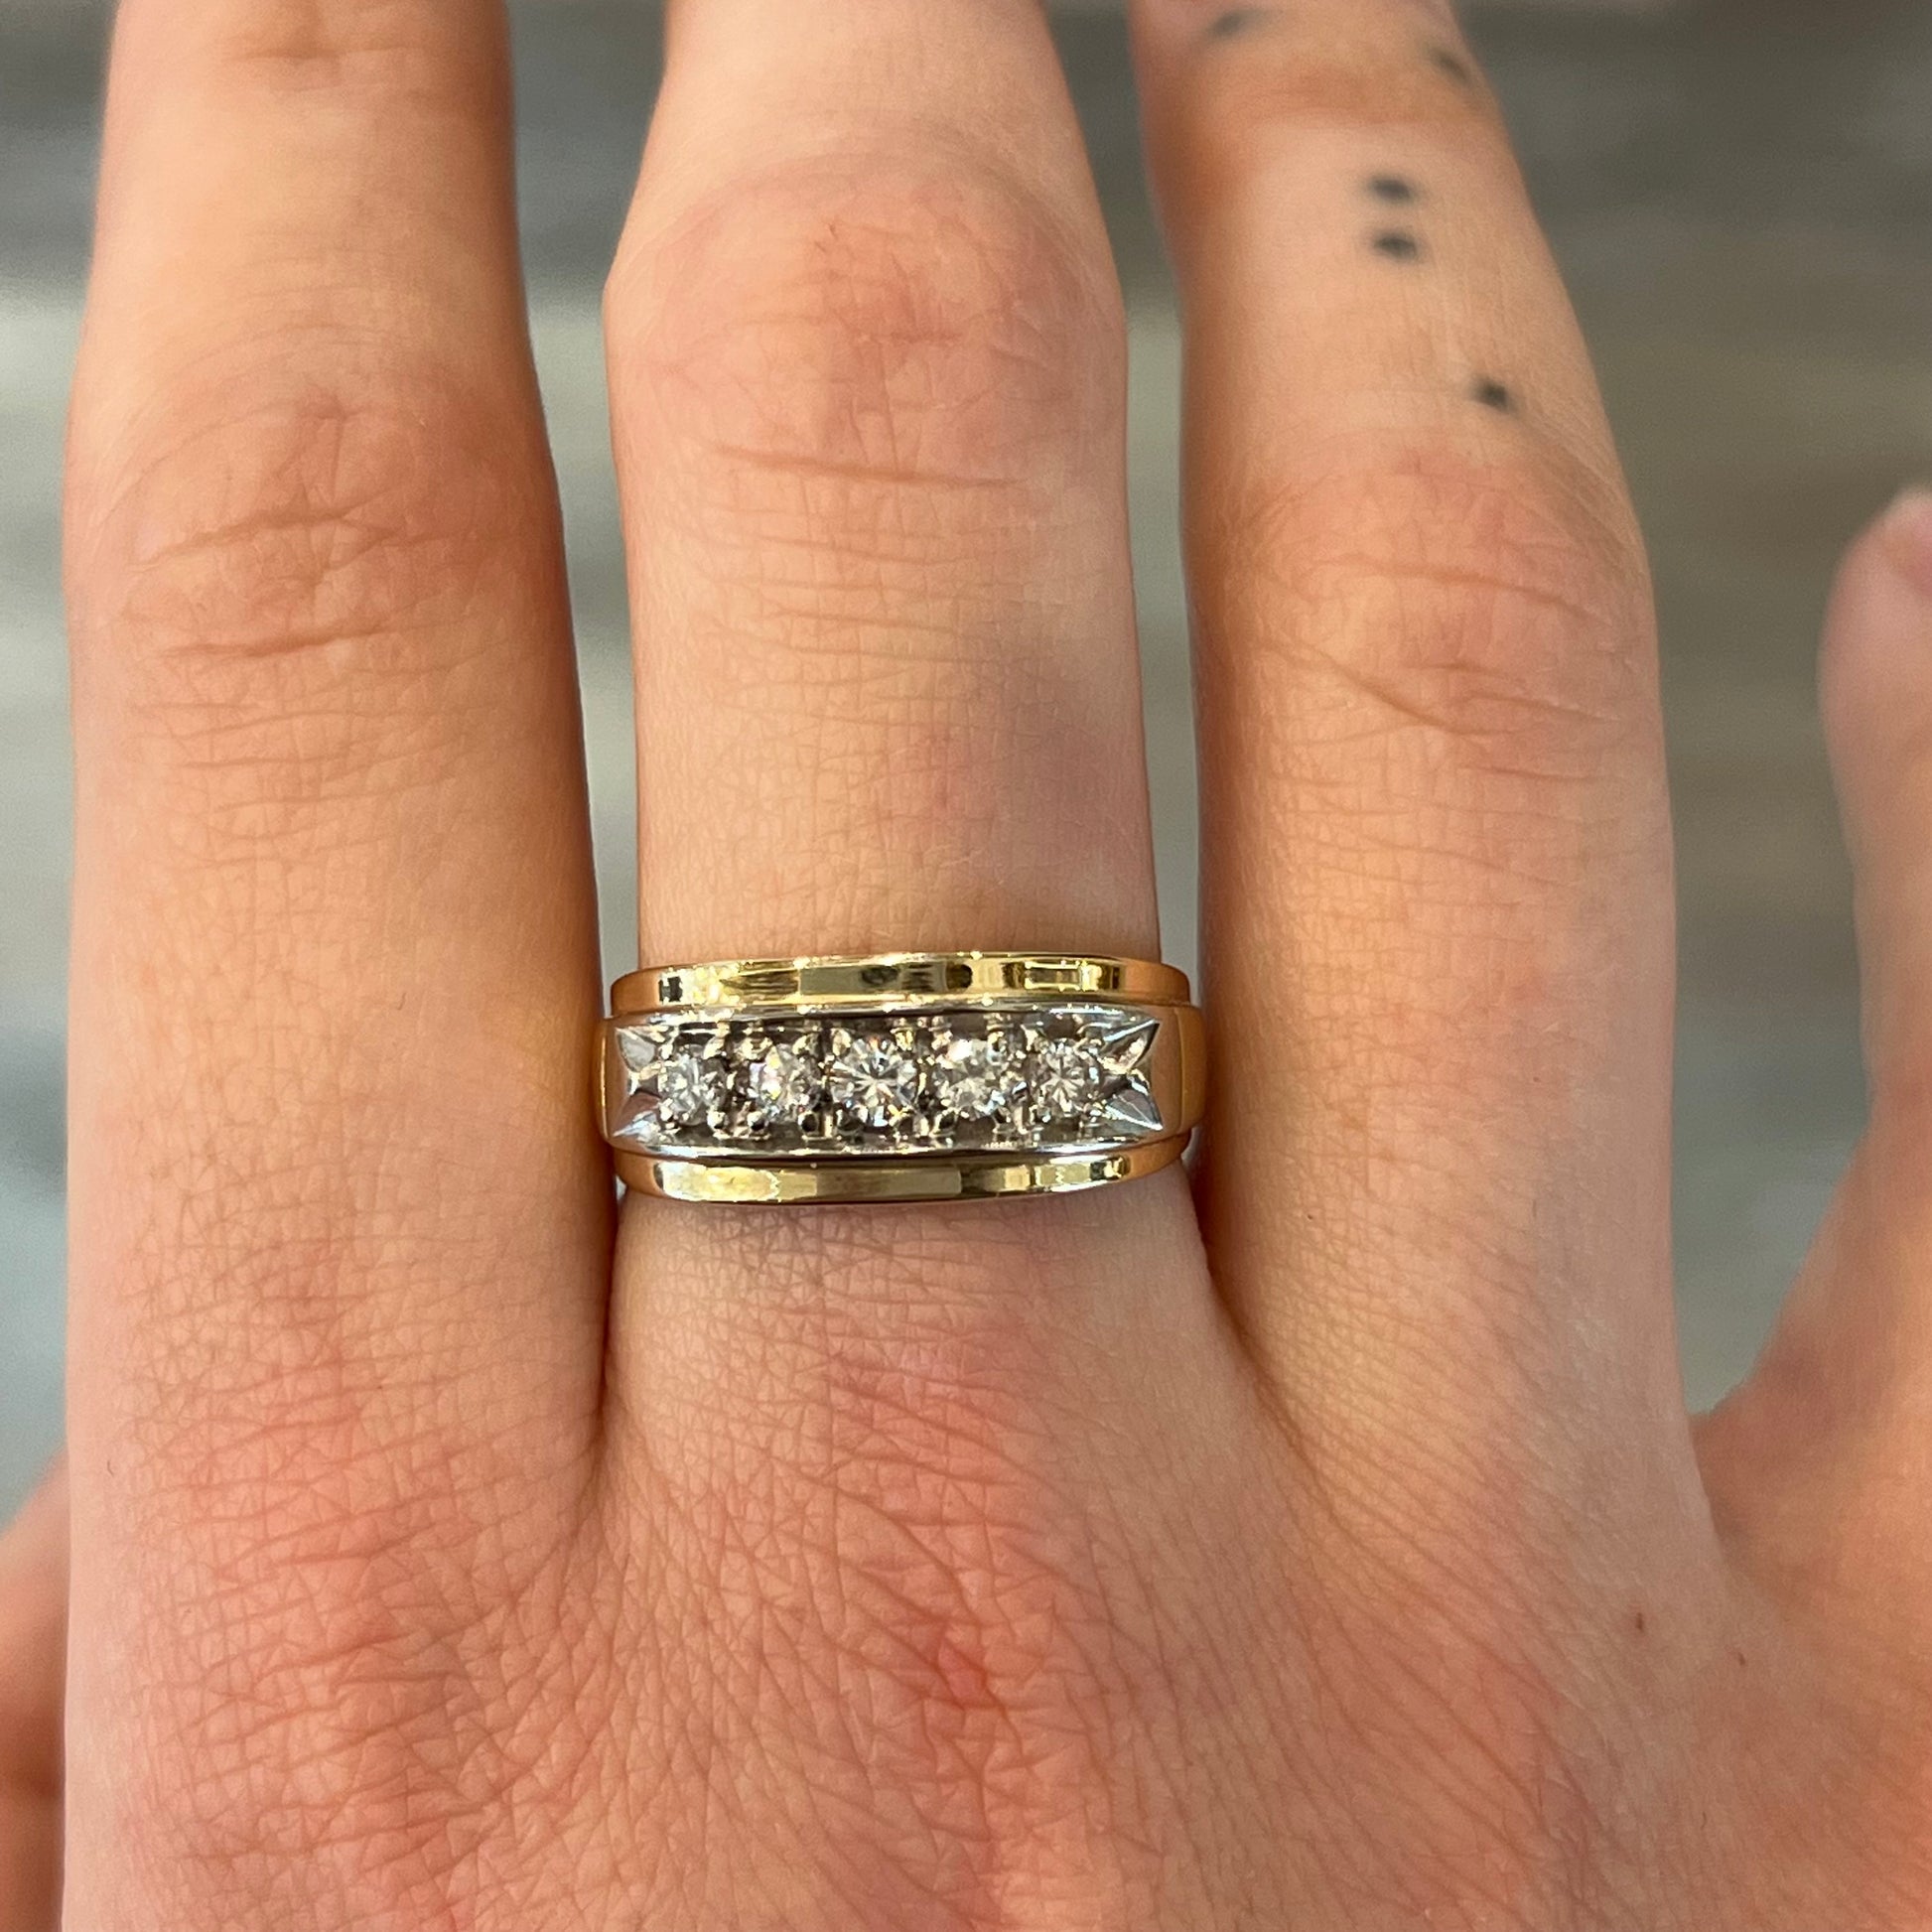 Vintage Men's Five Stone Diamond Ring in 14k Yellow Gold